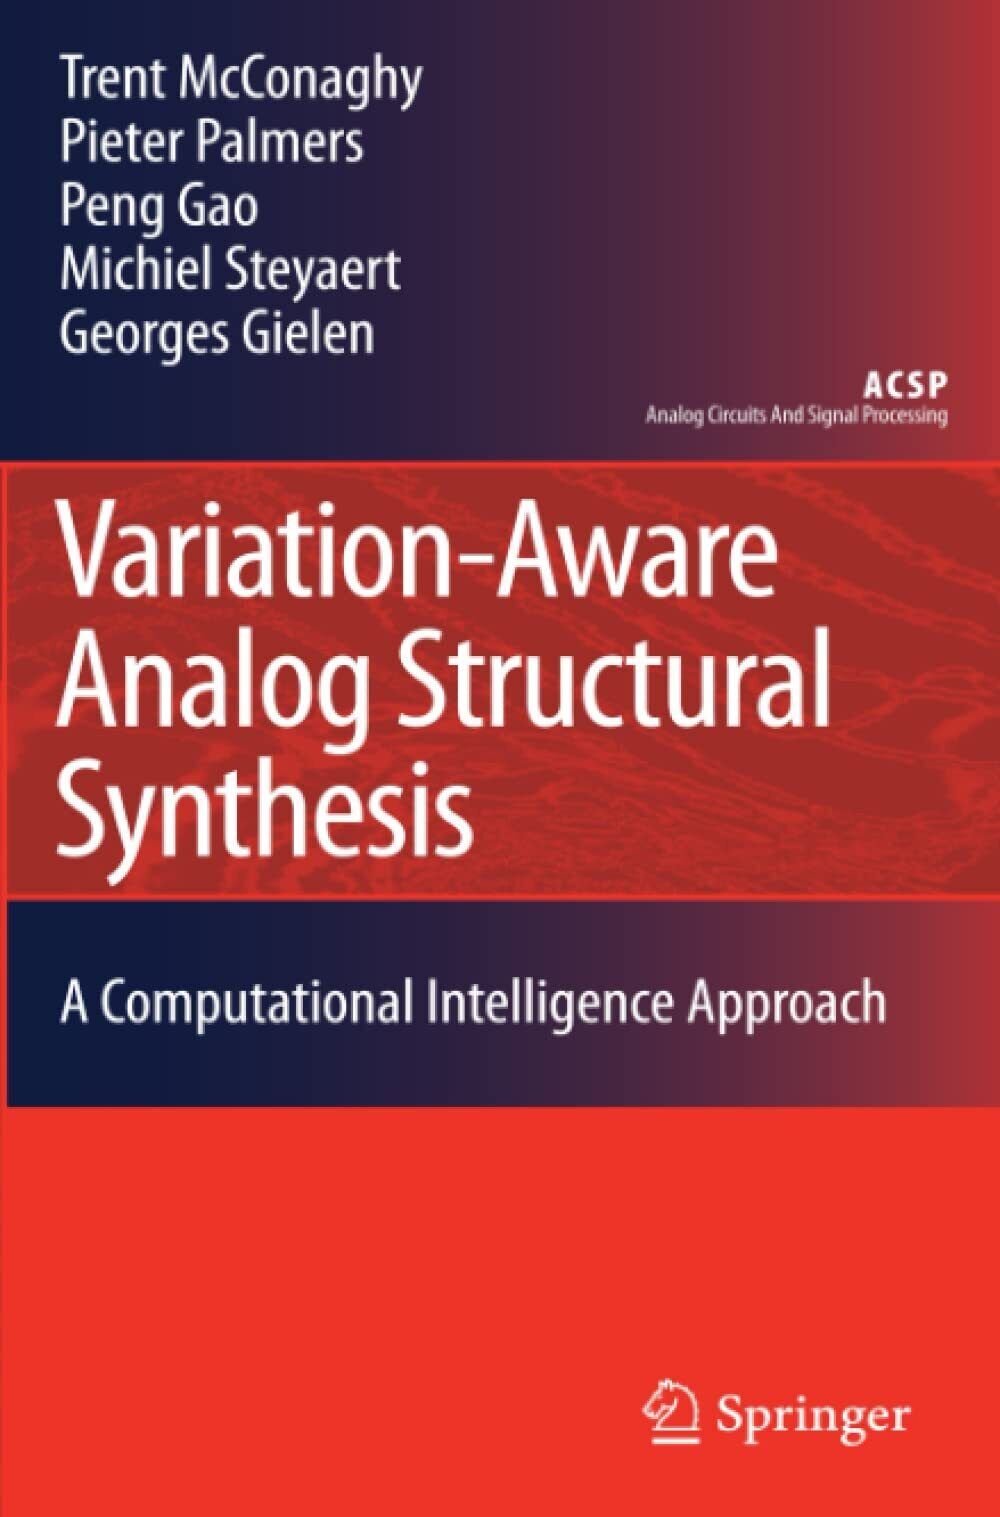 Variation-Aware Analog Structural Synthesis - Springer, 2011